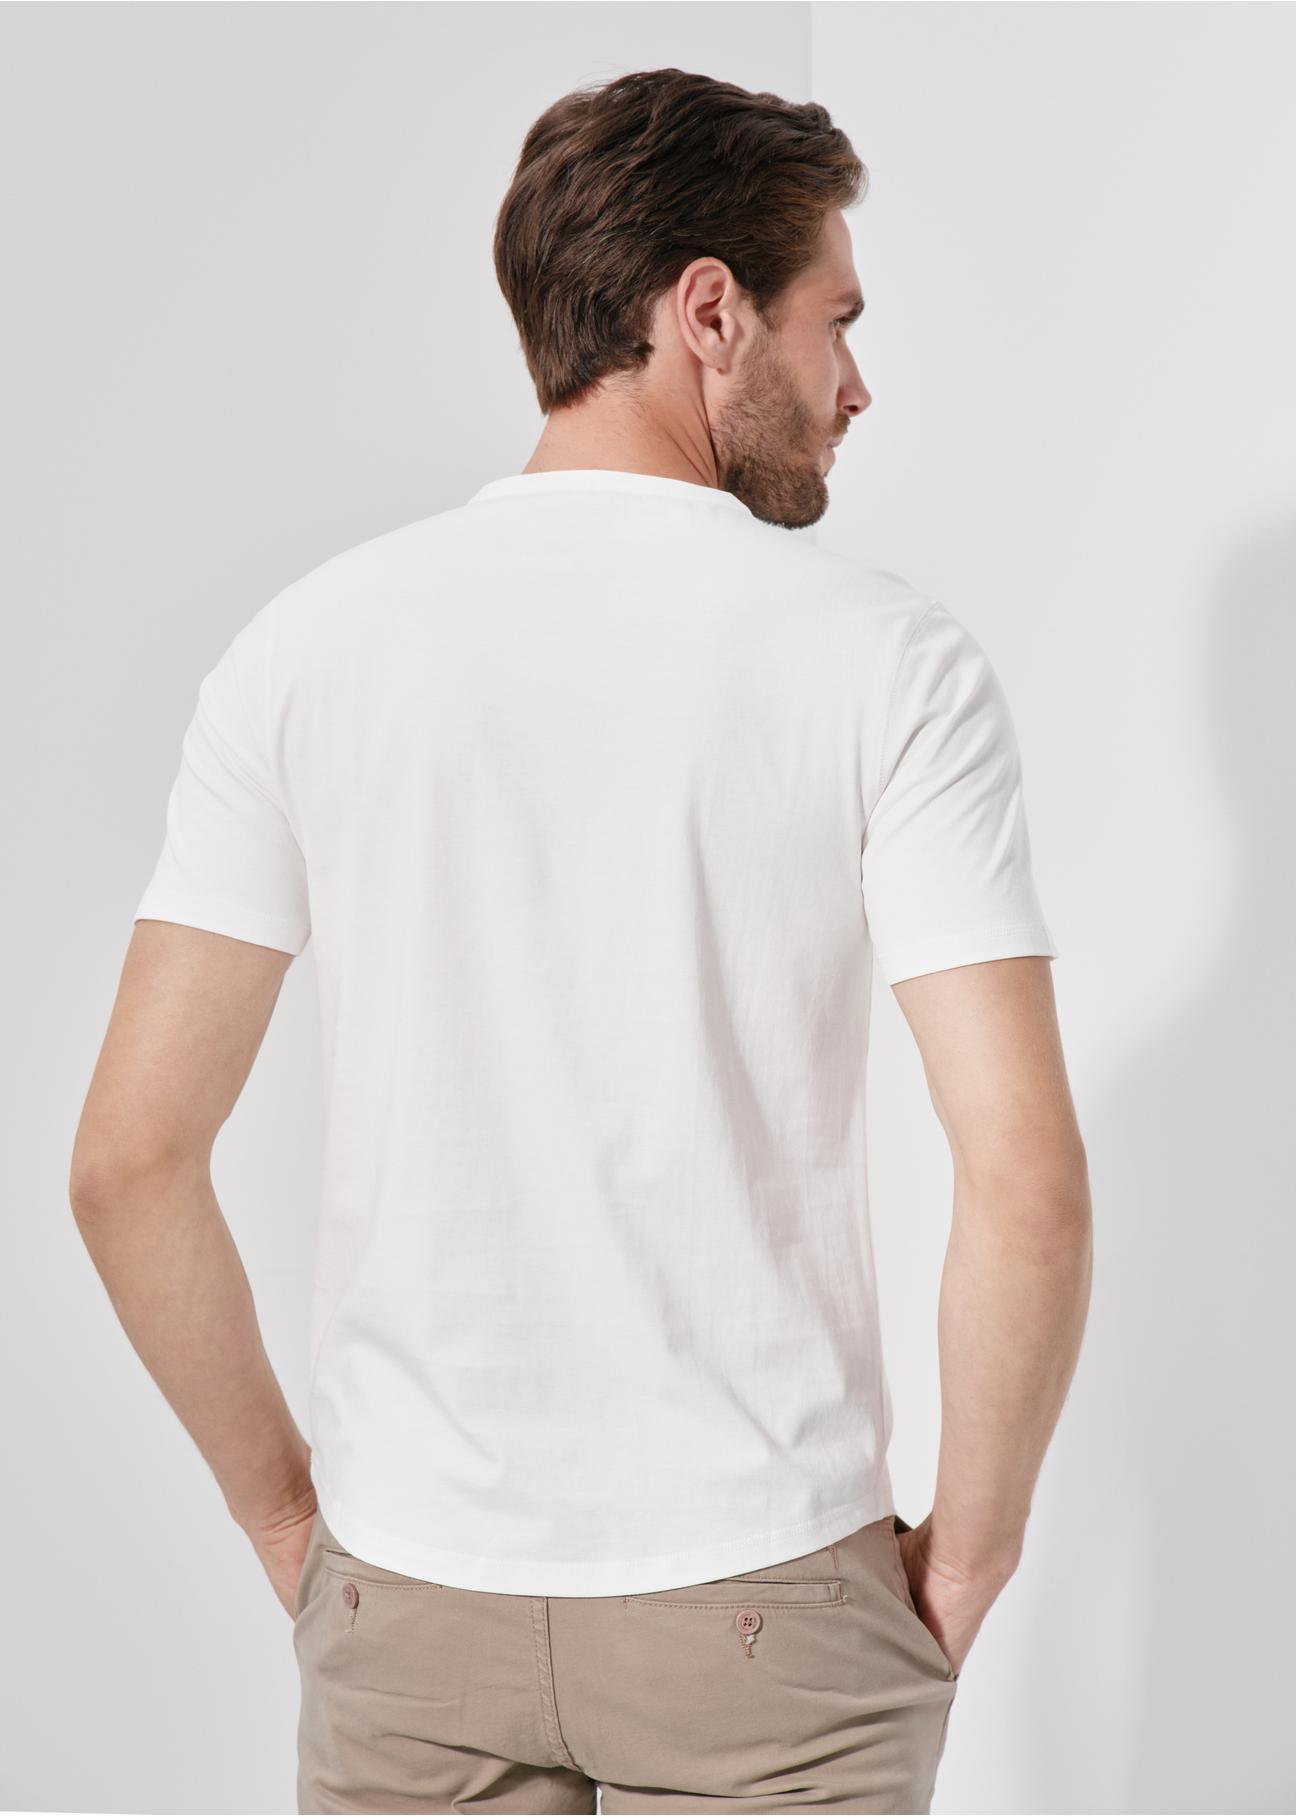 Kremowy T-shirt typu henley męski TSHMT-0104-12(W24)